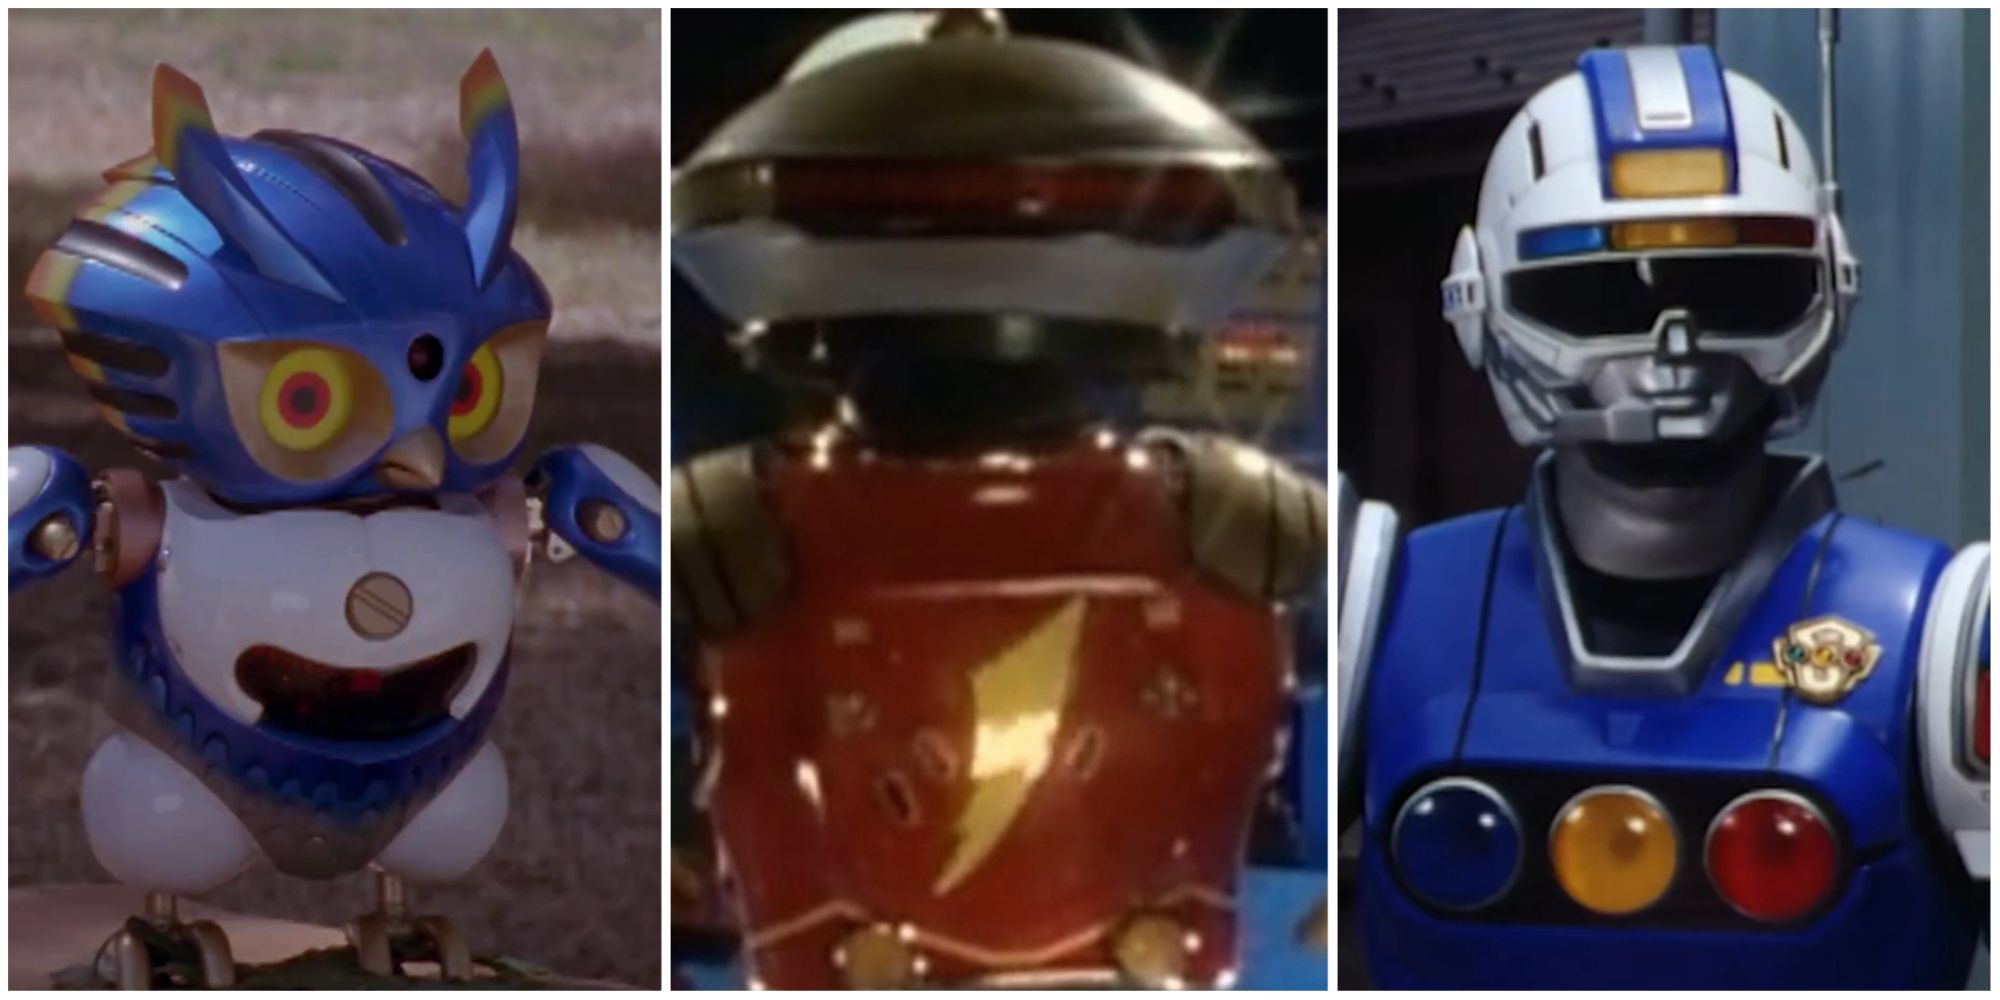 Circuit Alpha 5 and Blue Senturion Power Rangers